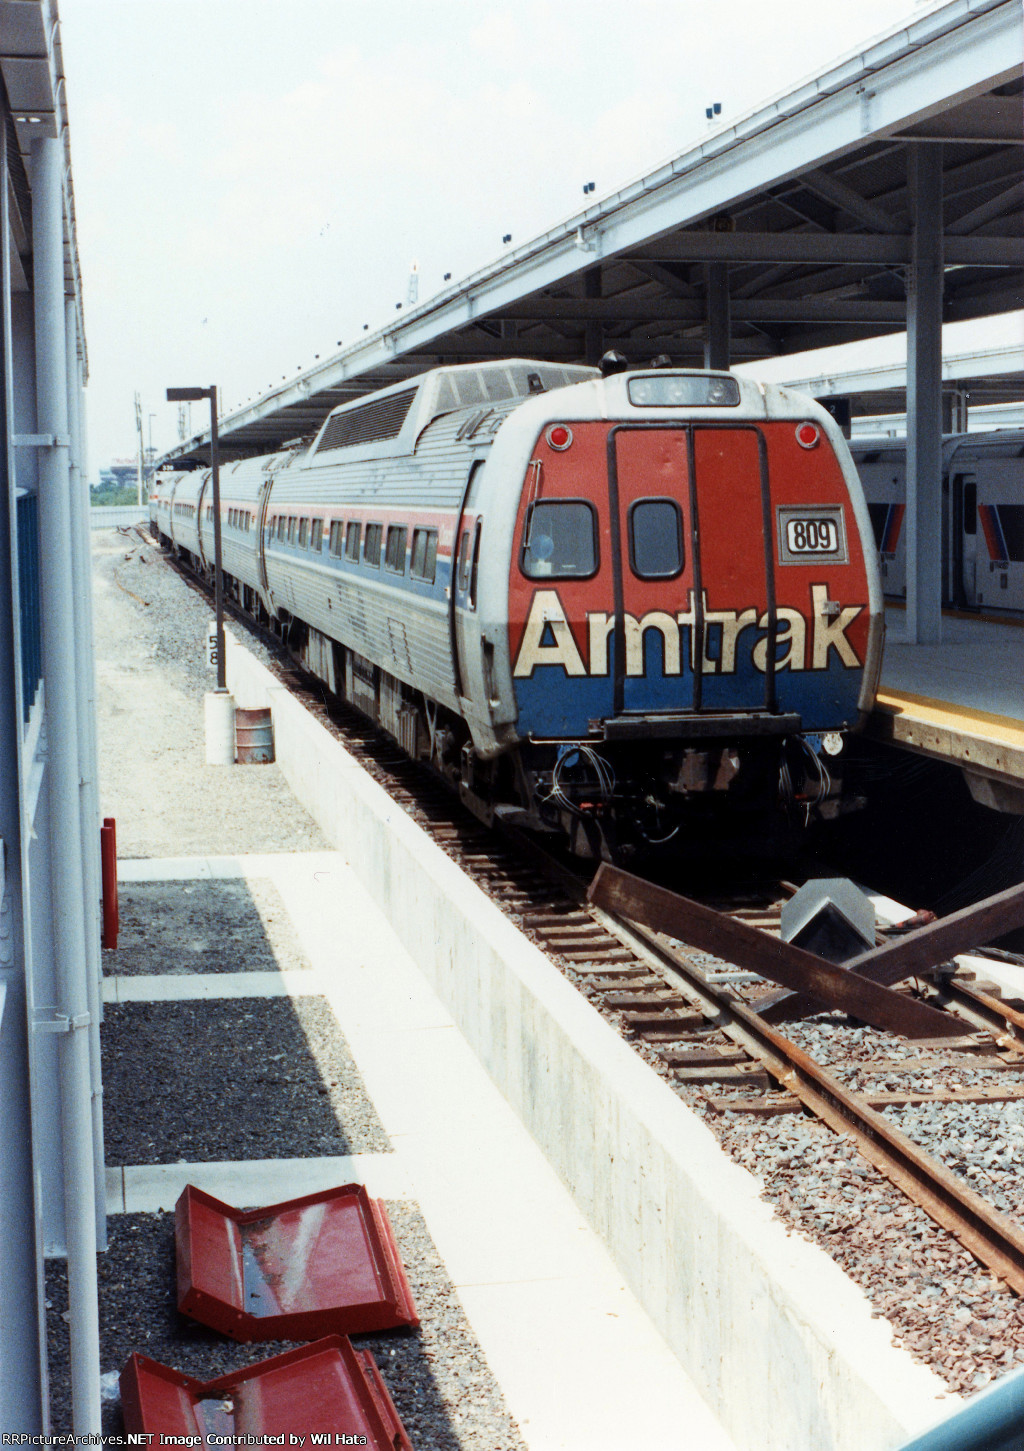 Amtrak Metroliner Coach 809